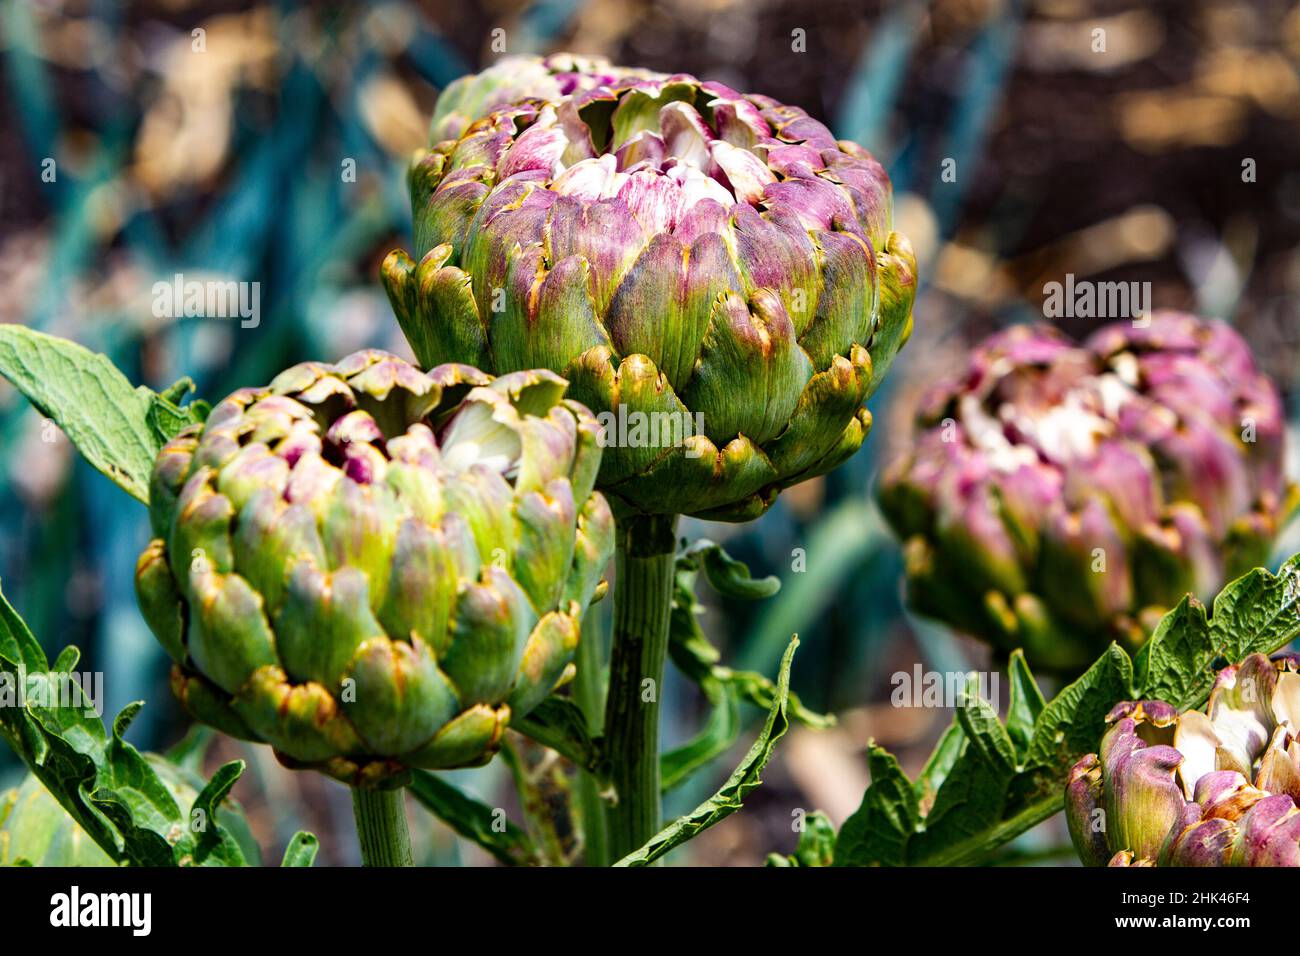 USA, Oregon, McMinnville. Artichoke plants in the garden. Stock Photo